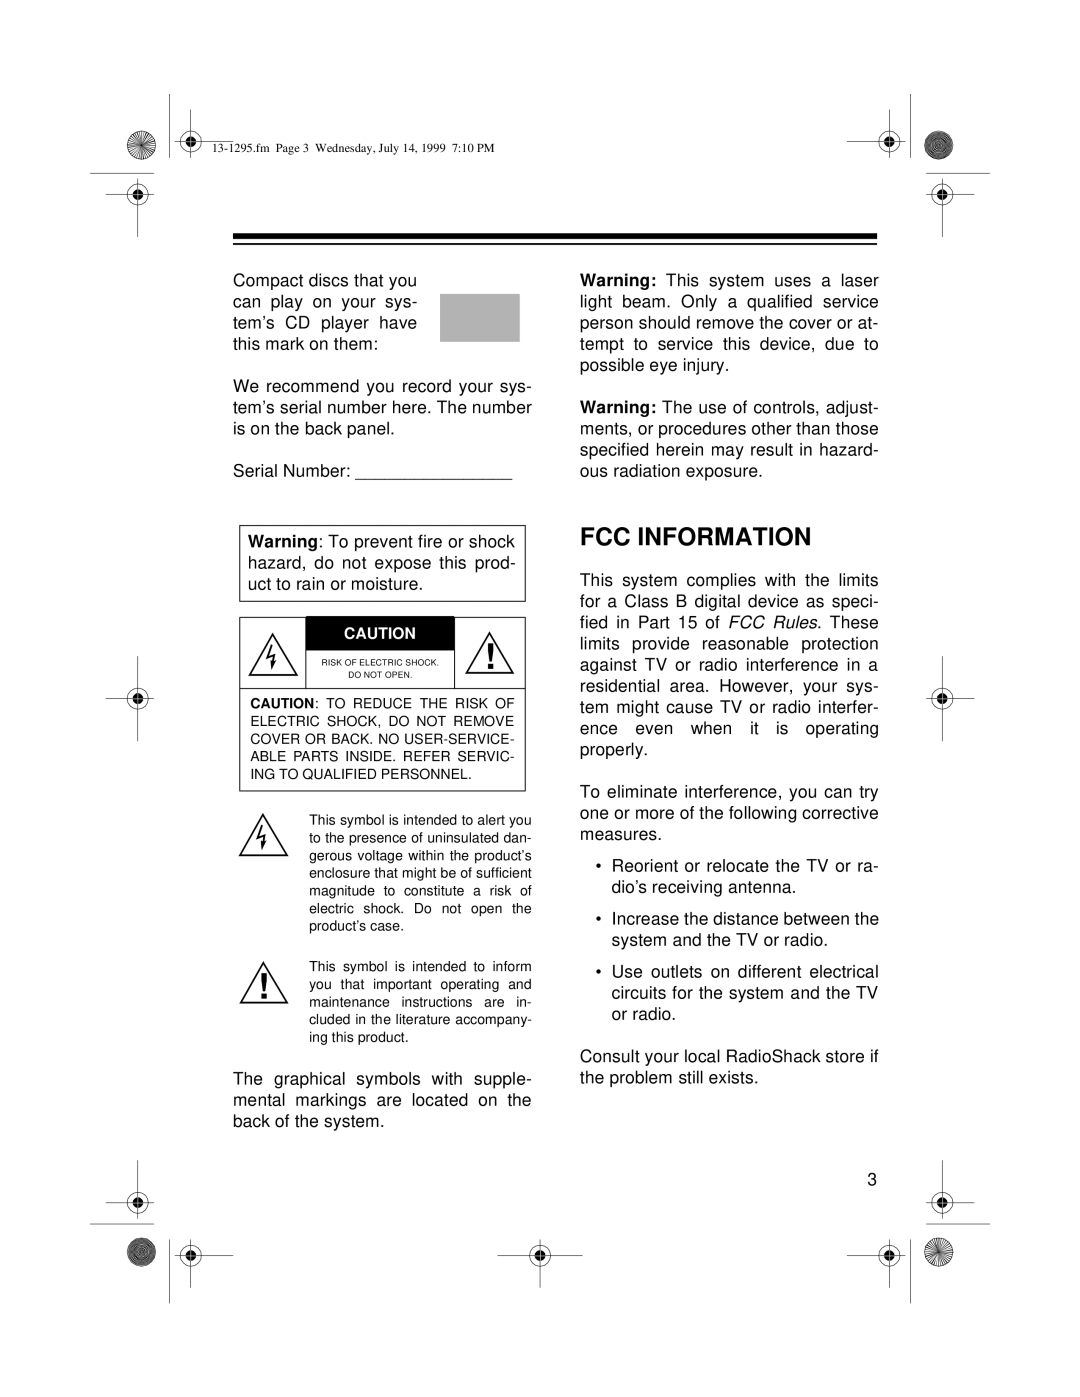 Optimus SYSTEM 747 owner manual Fcc Information 